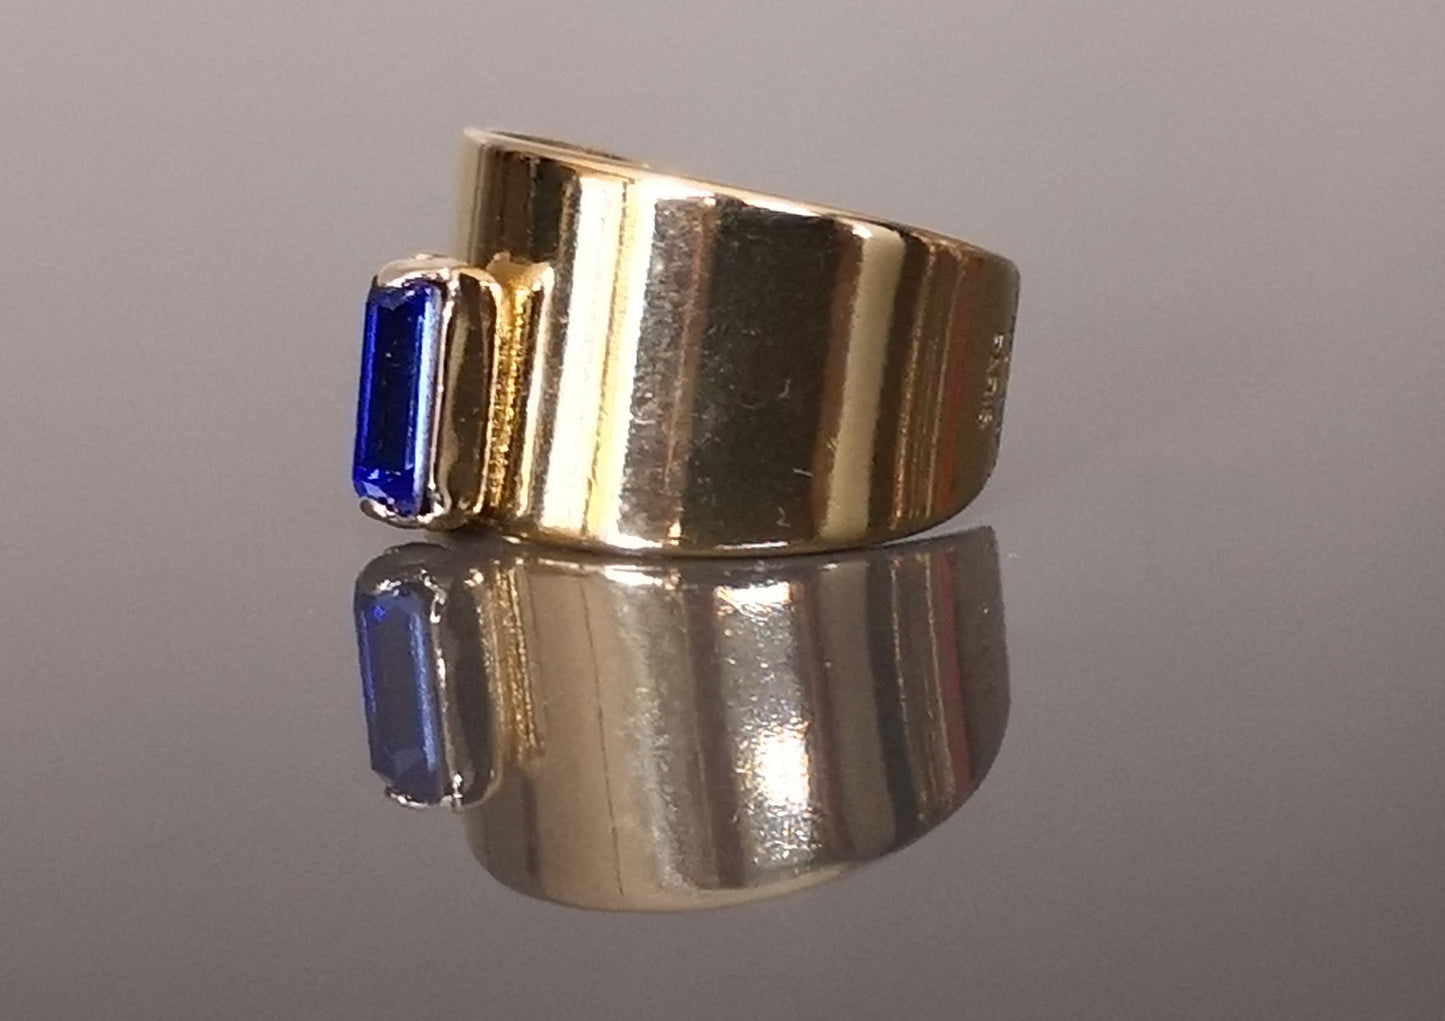 Sayuri smaller size crystal ring